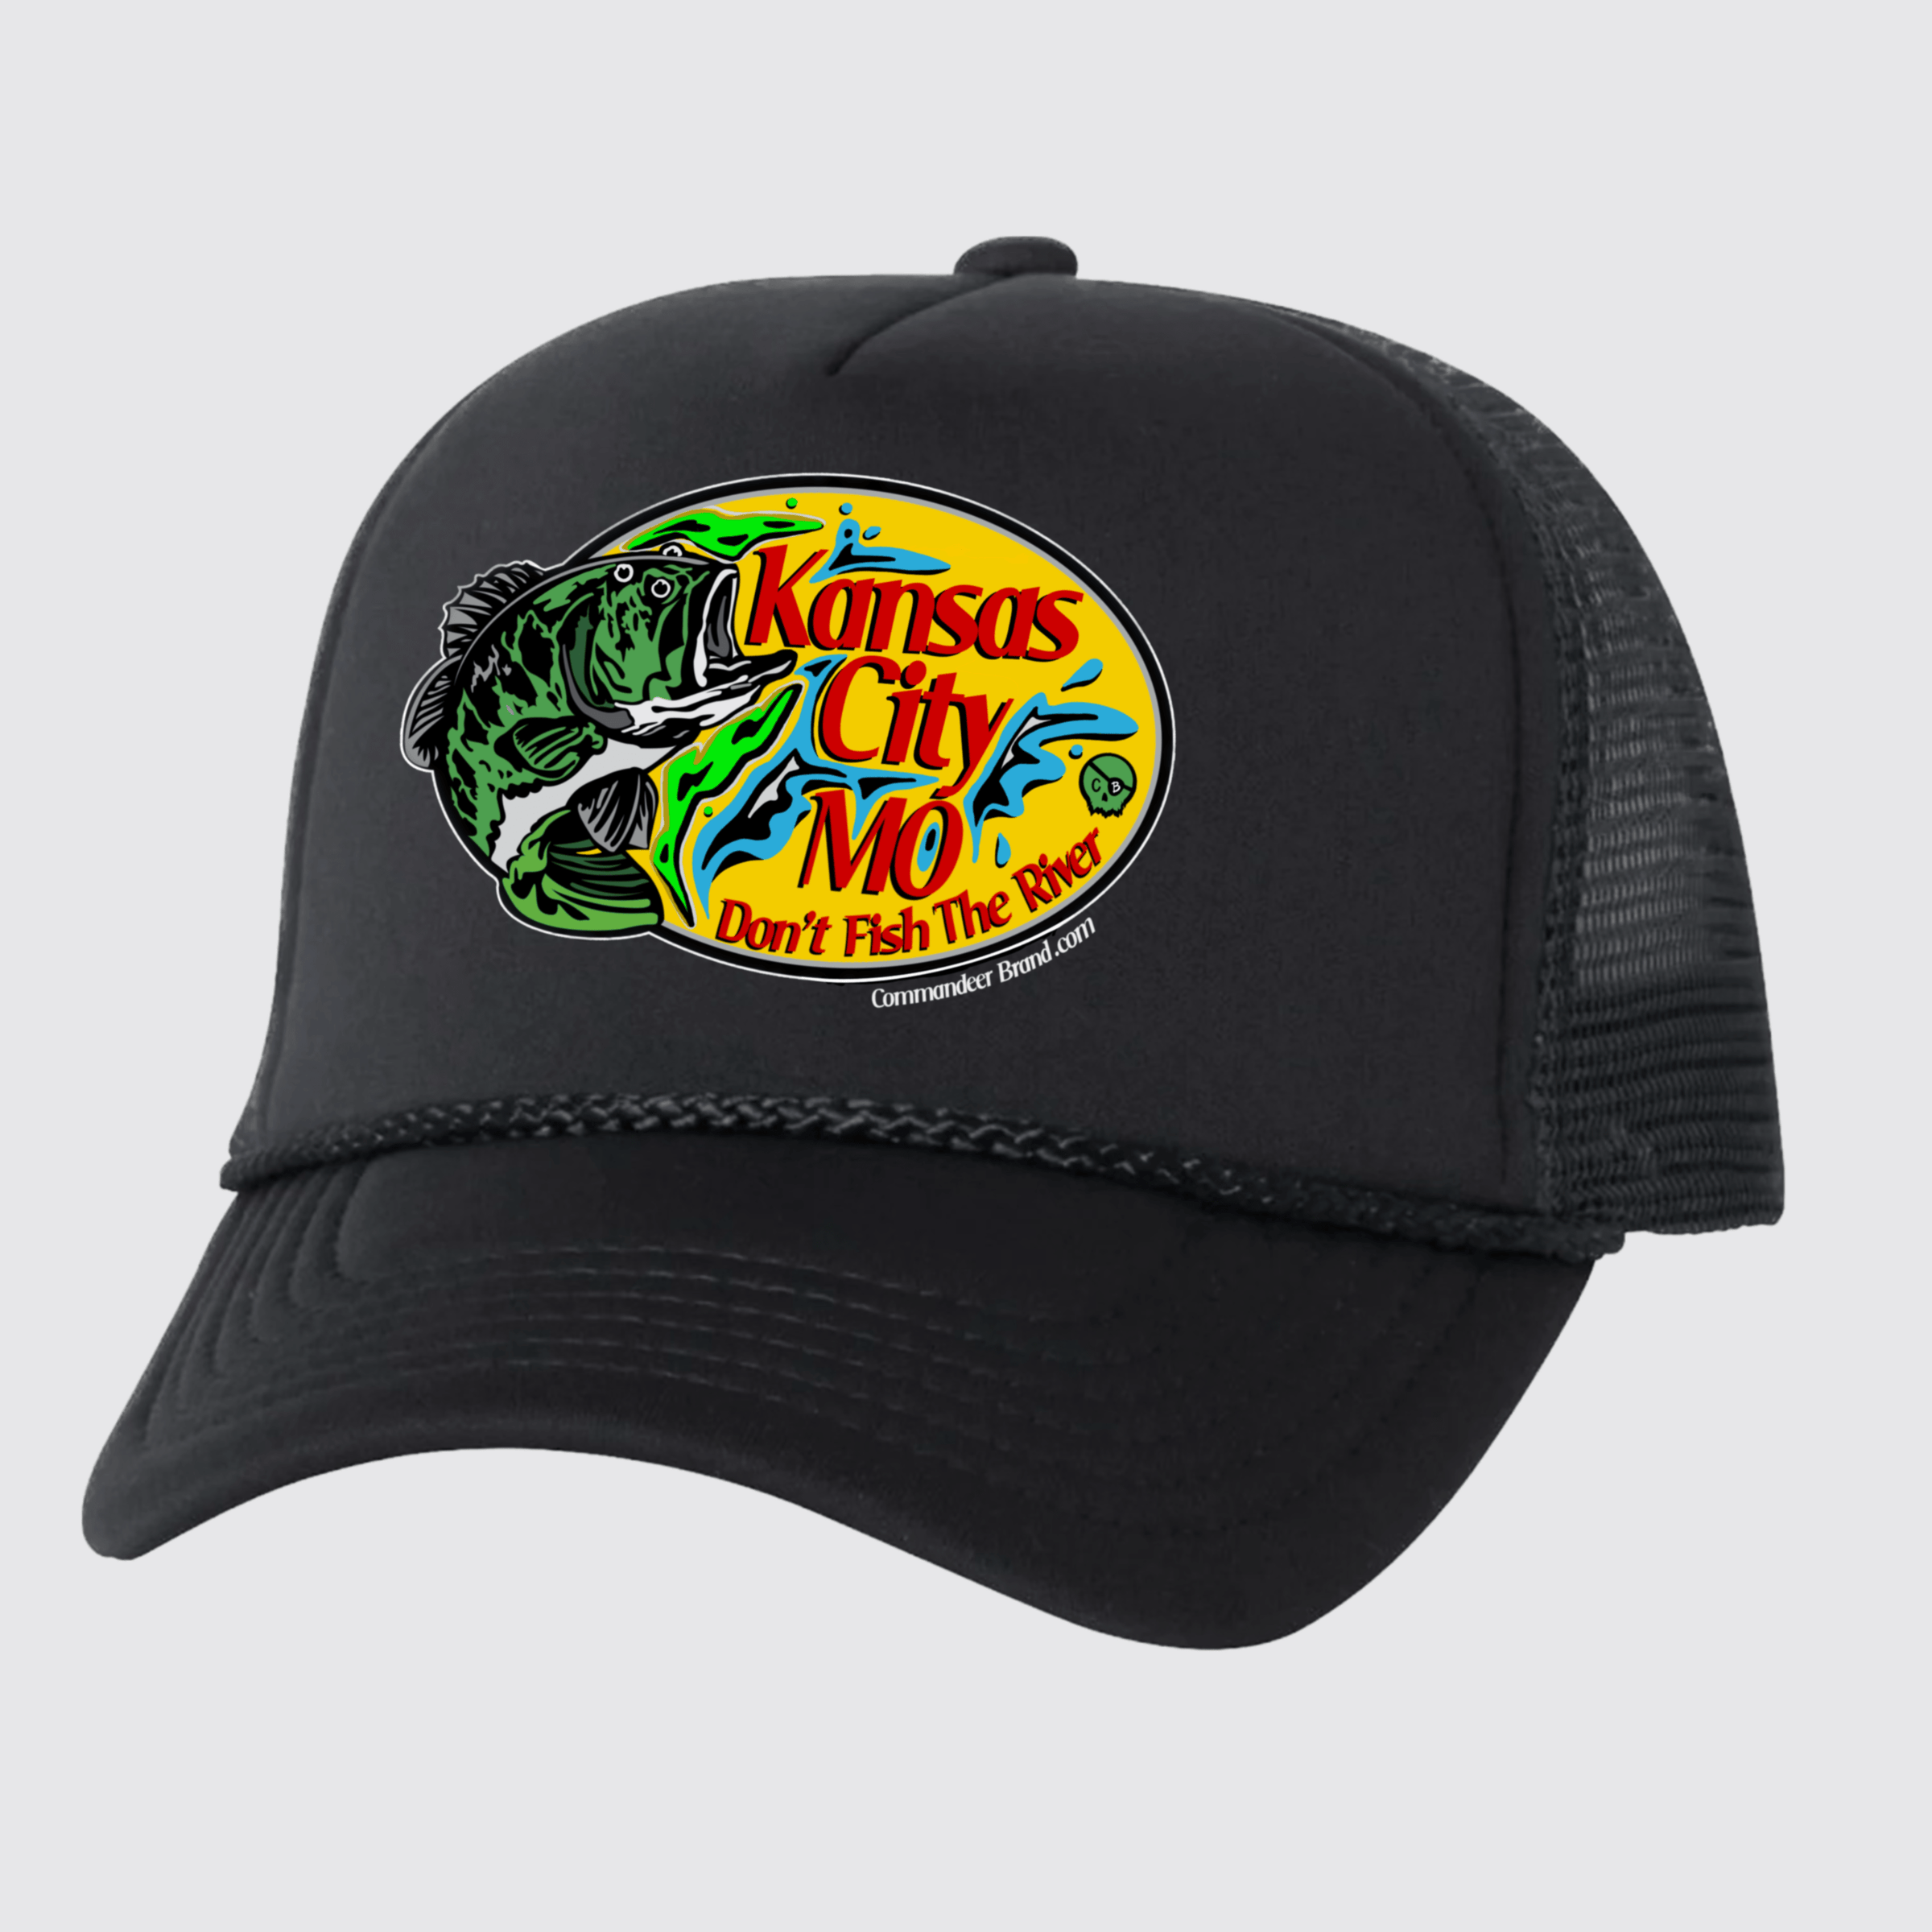 Kansas City MO River Pro Hat